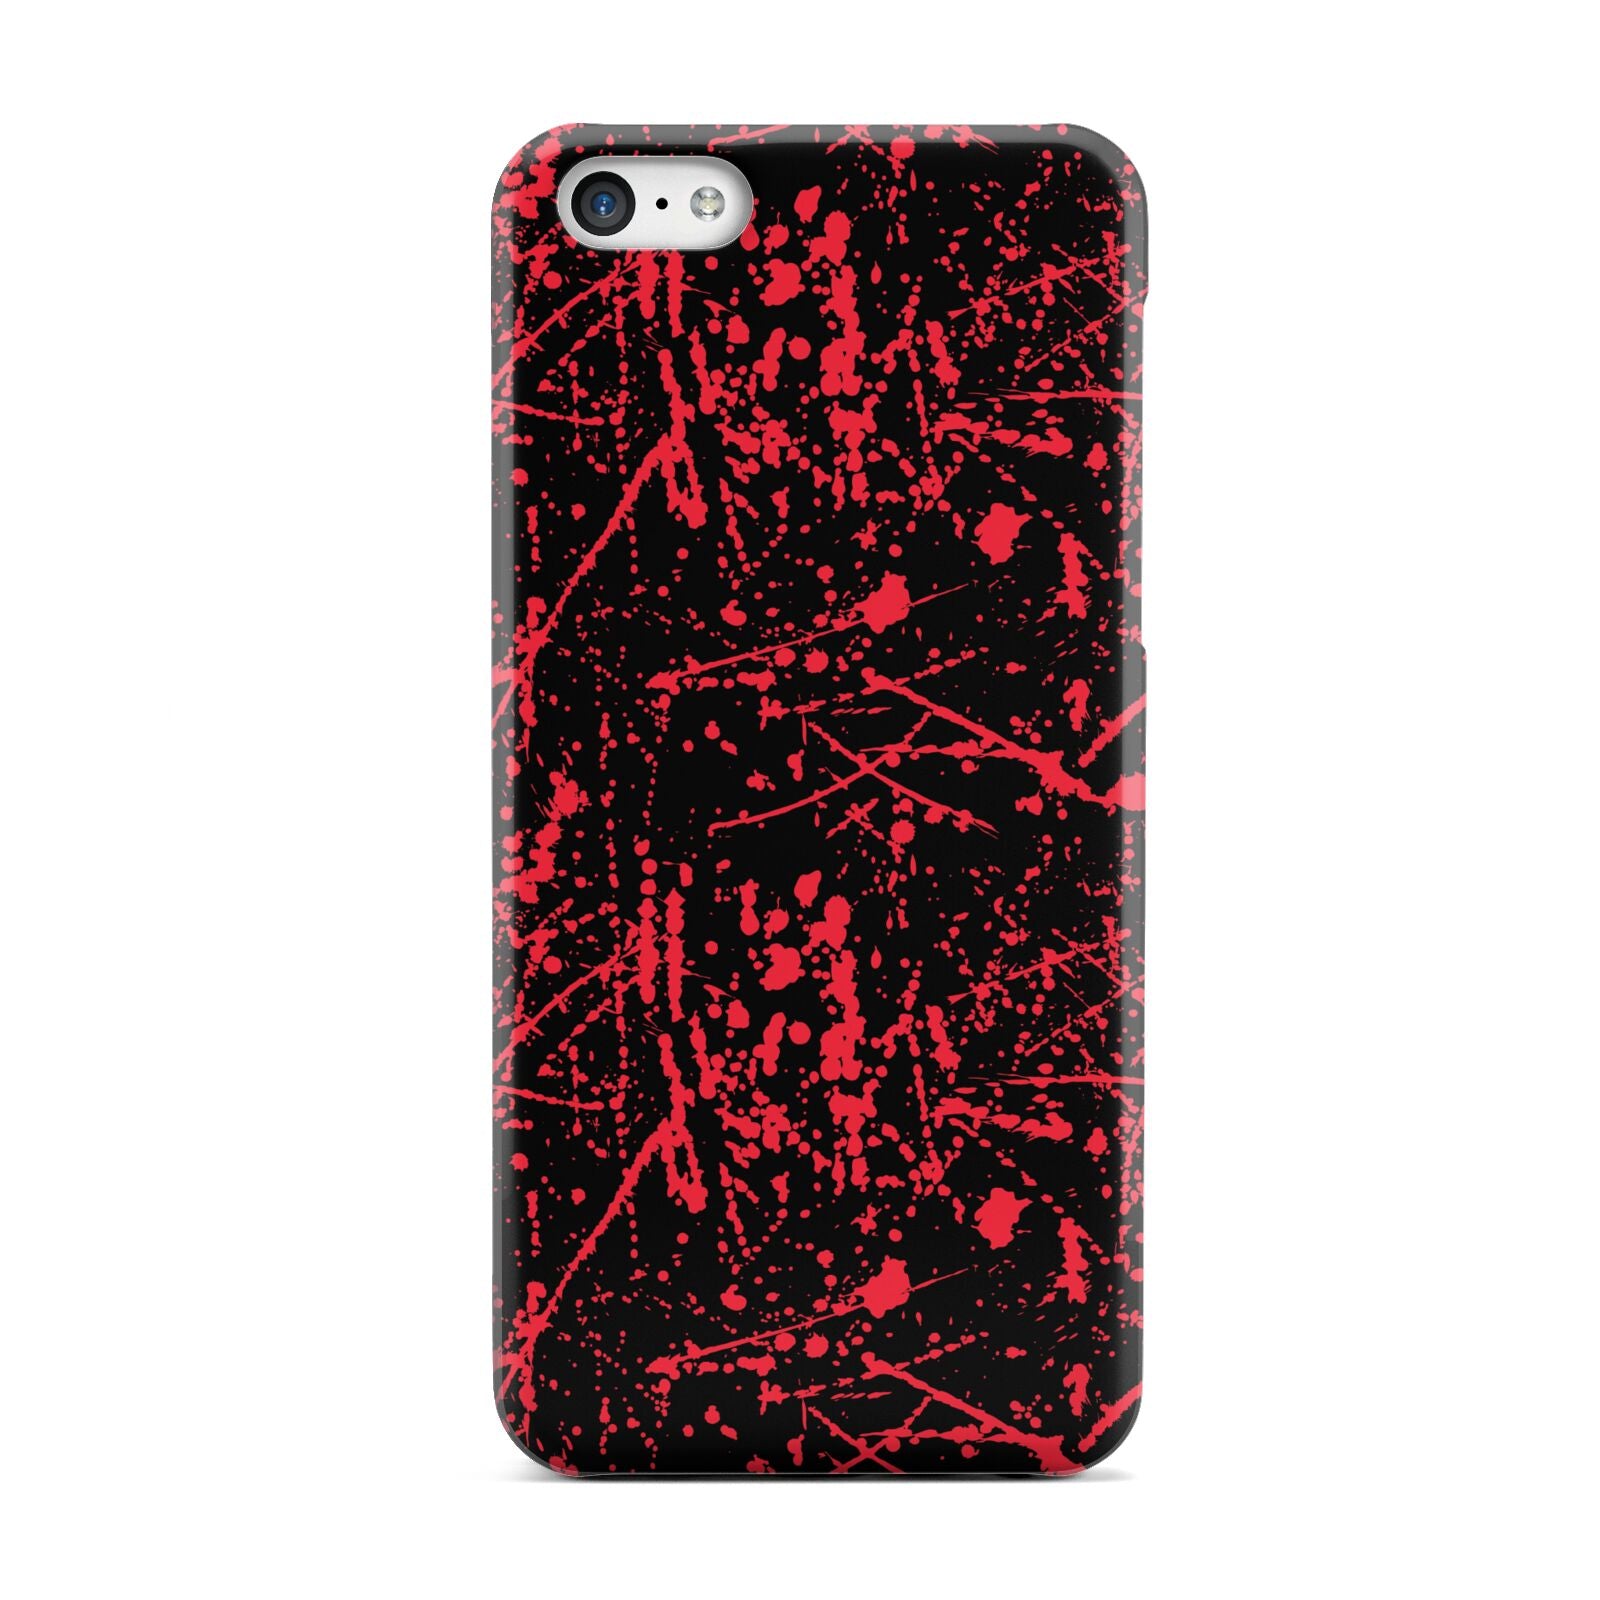 Blood Splatters Apple iPhone 5c Case